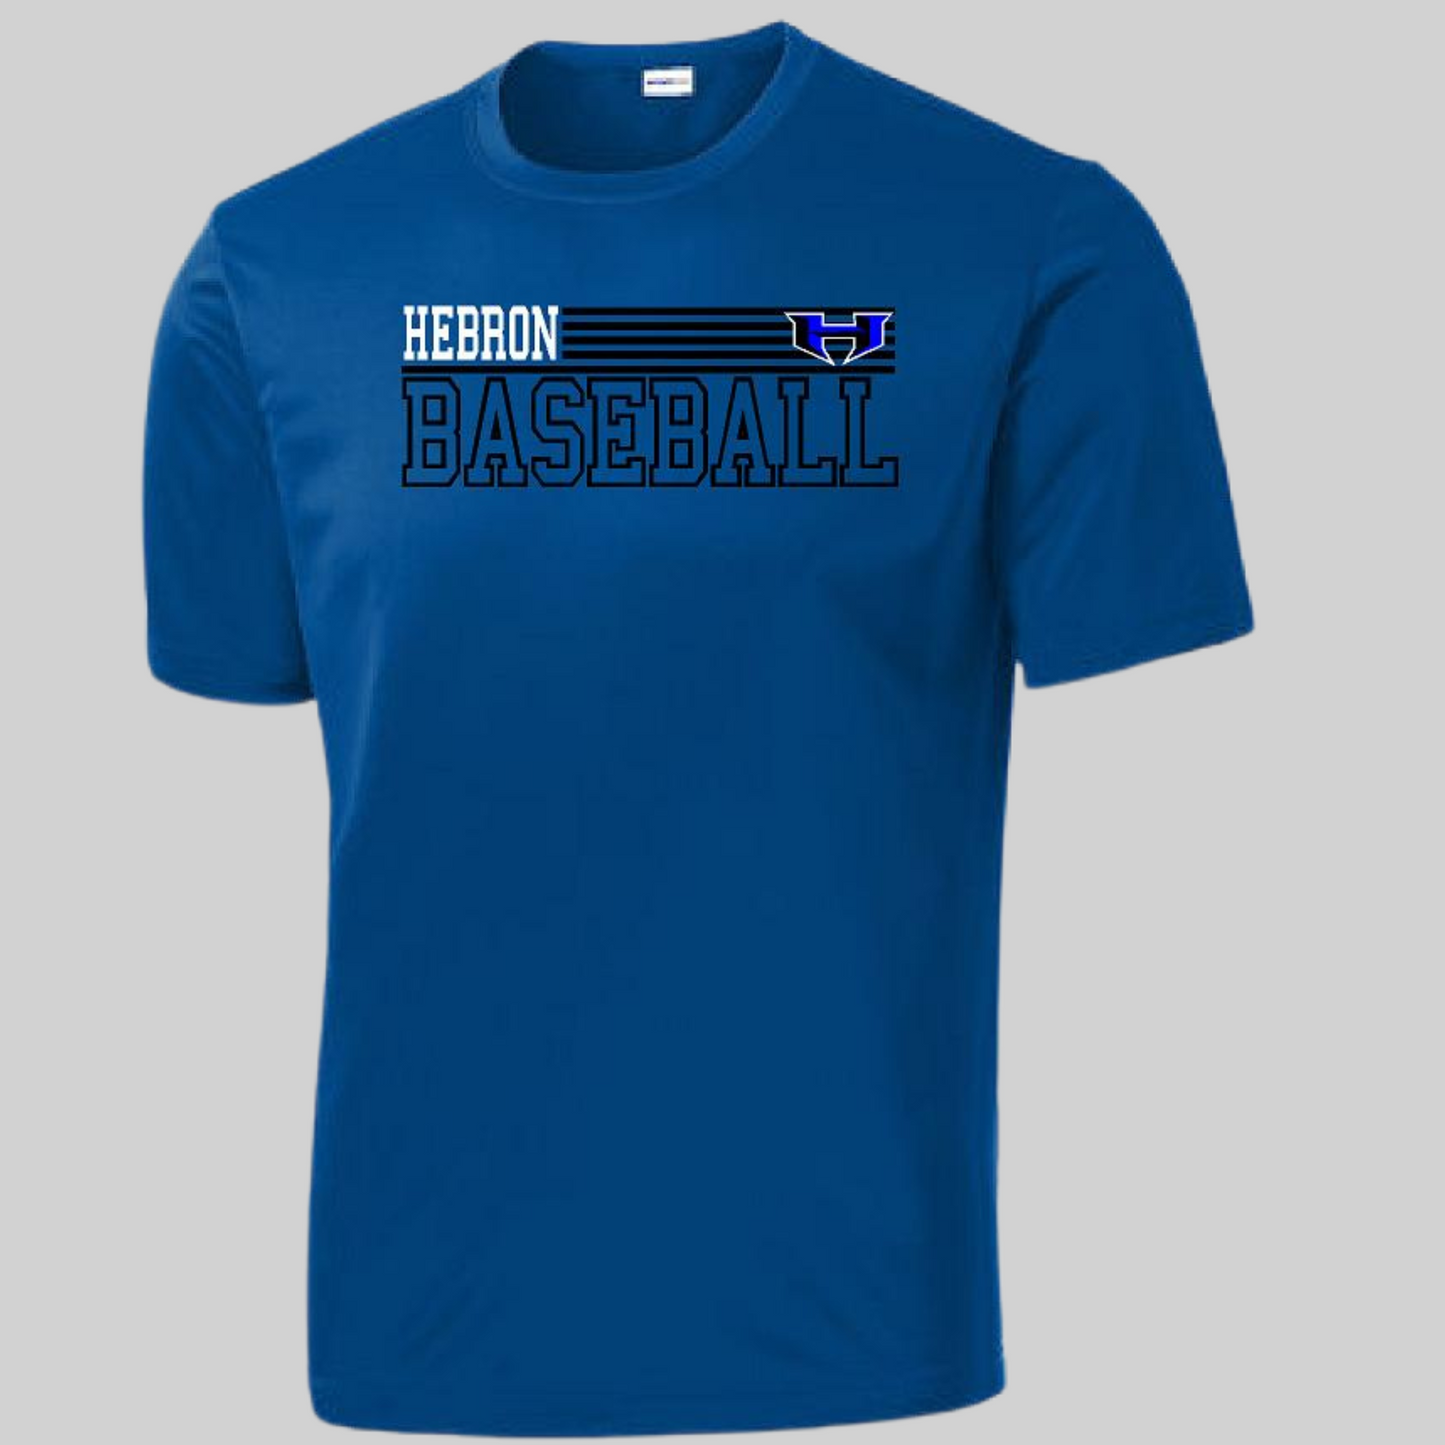 Hebron High School Baseball 23-3